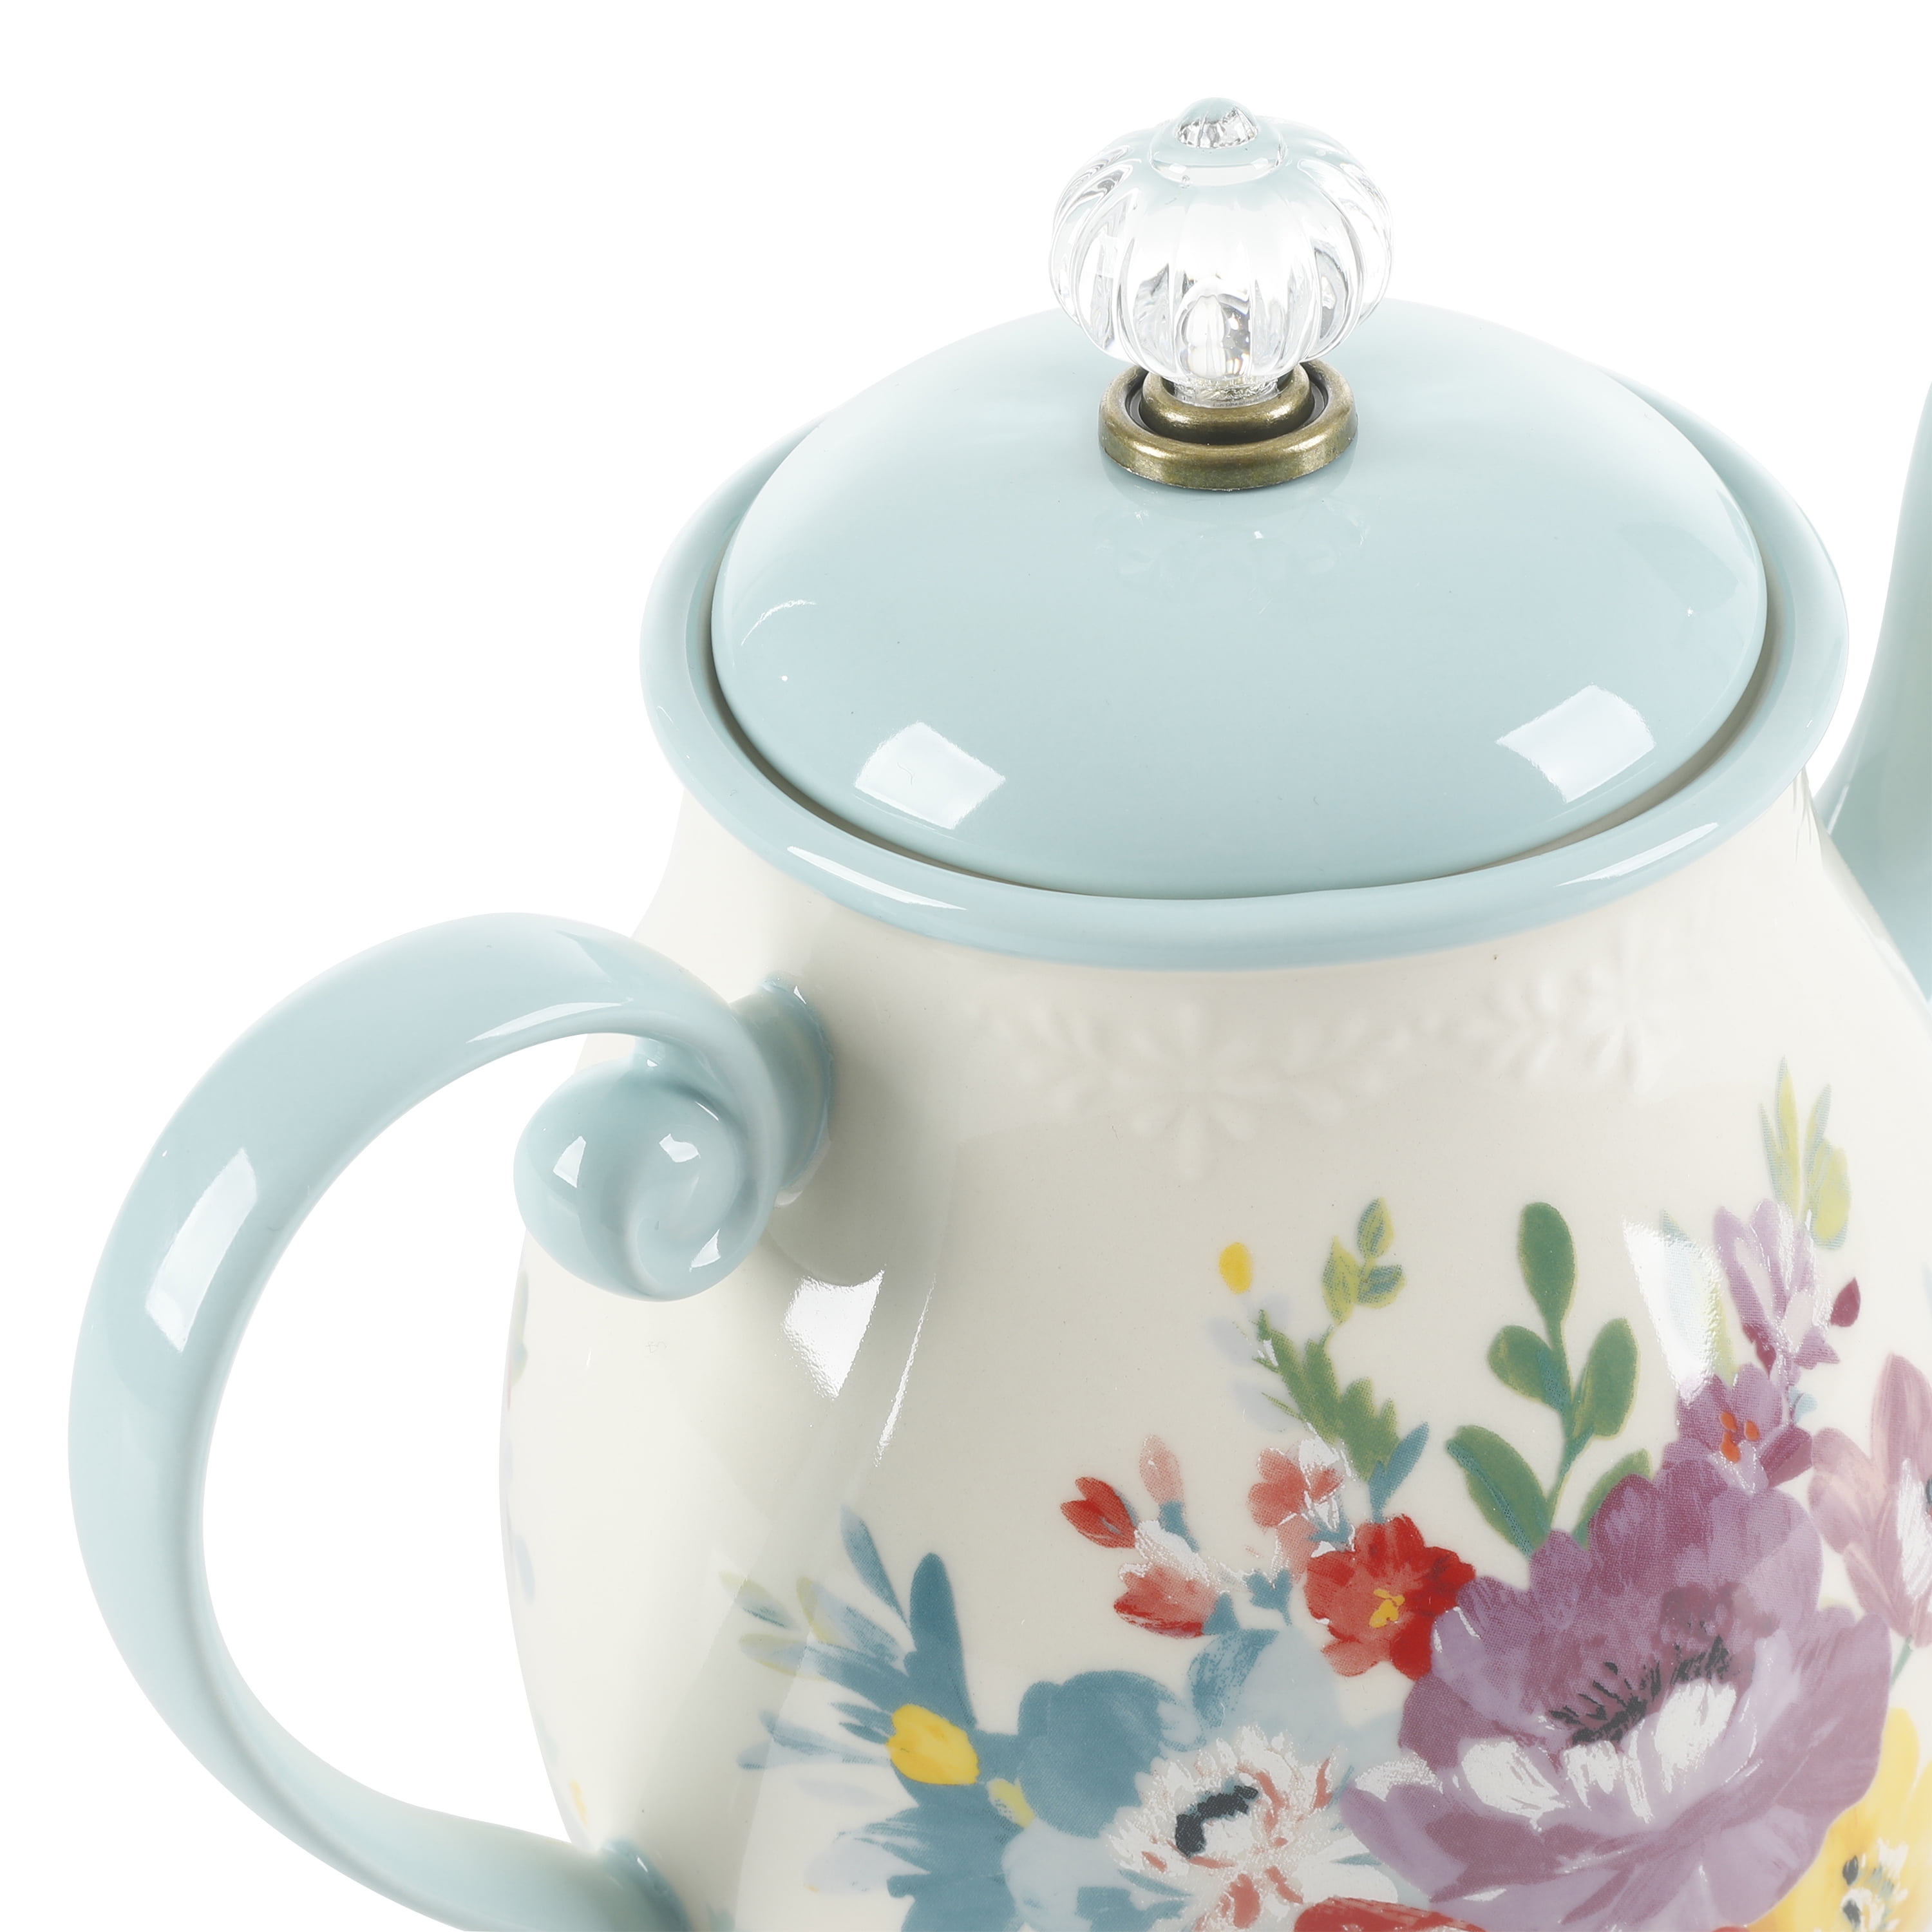 New Pioneer Woman Sweet Romance Gingham Tea Coffee Pot